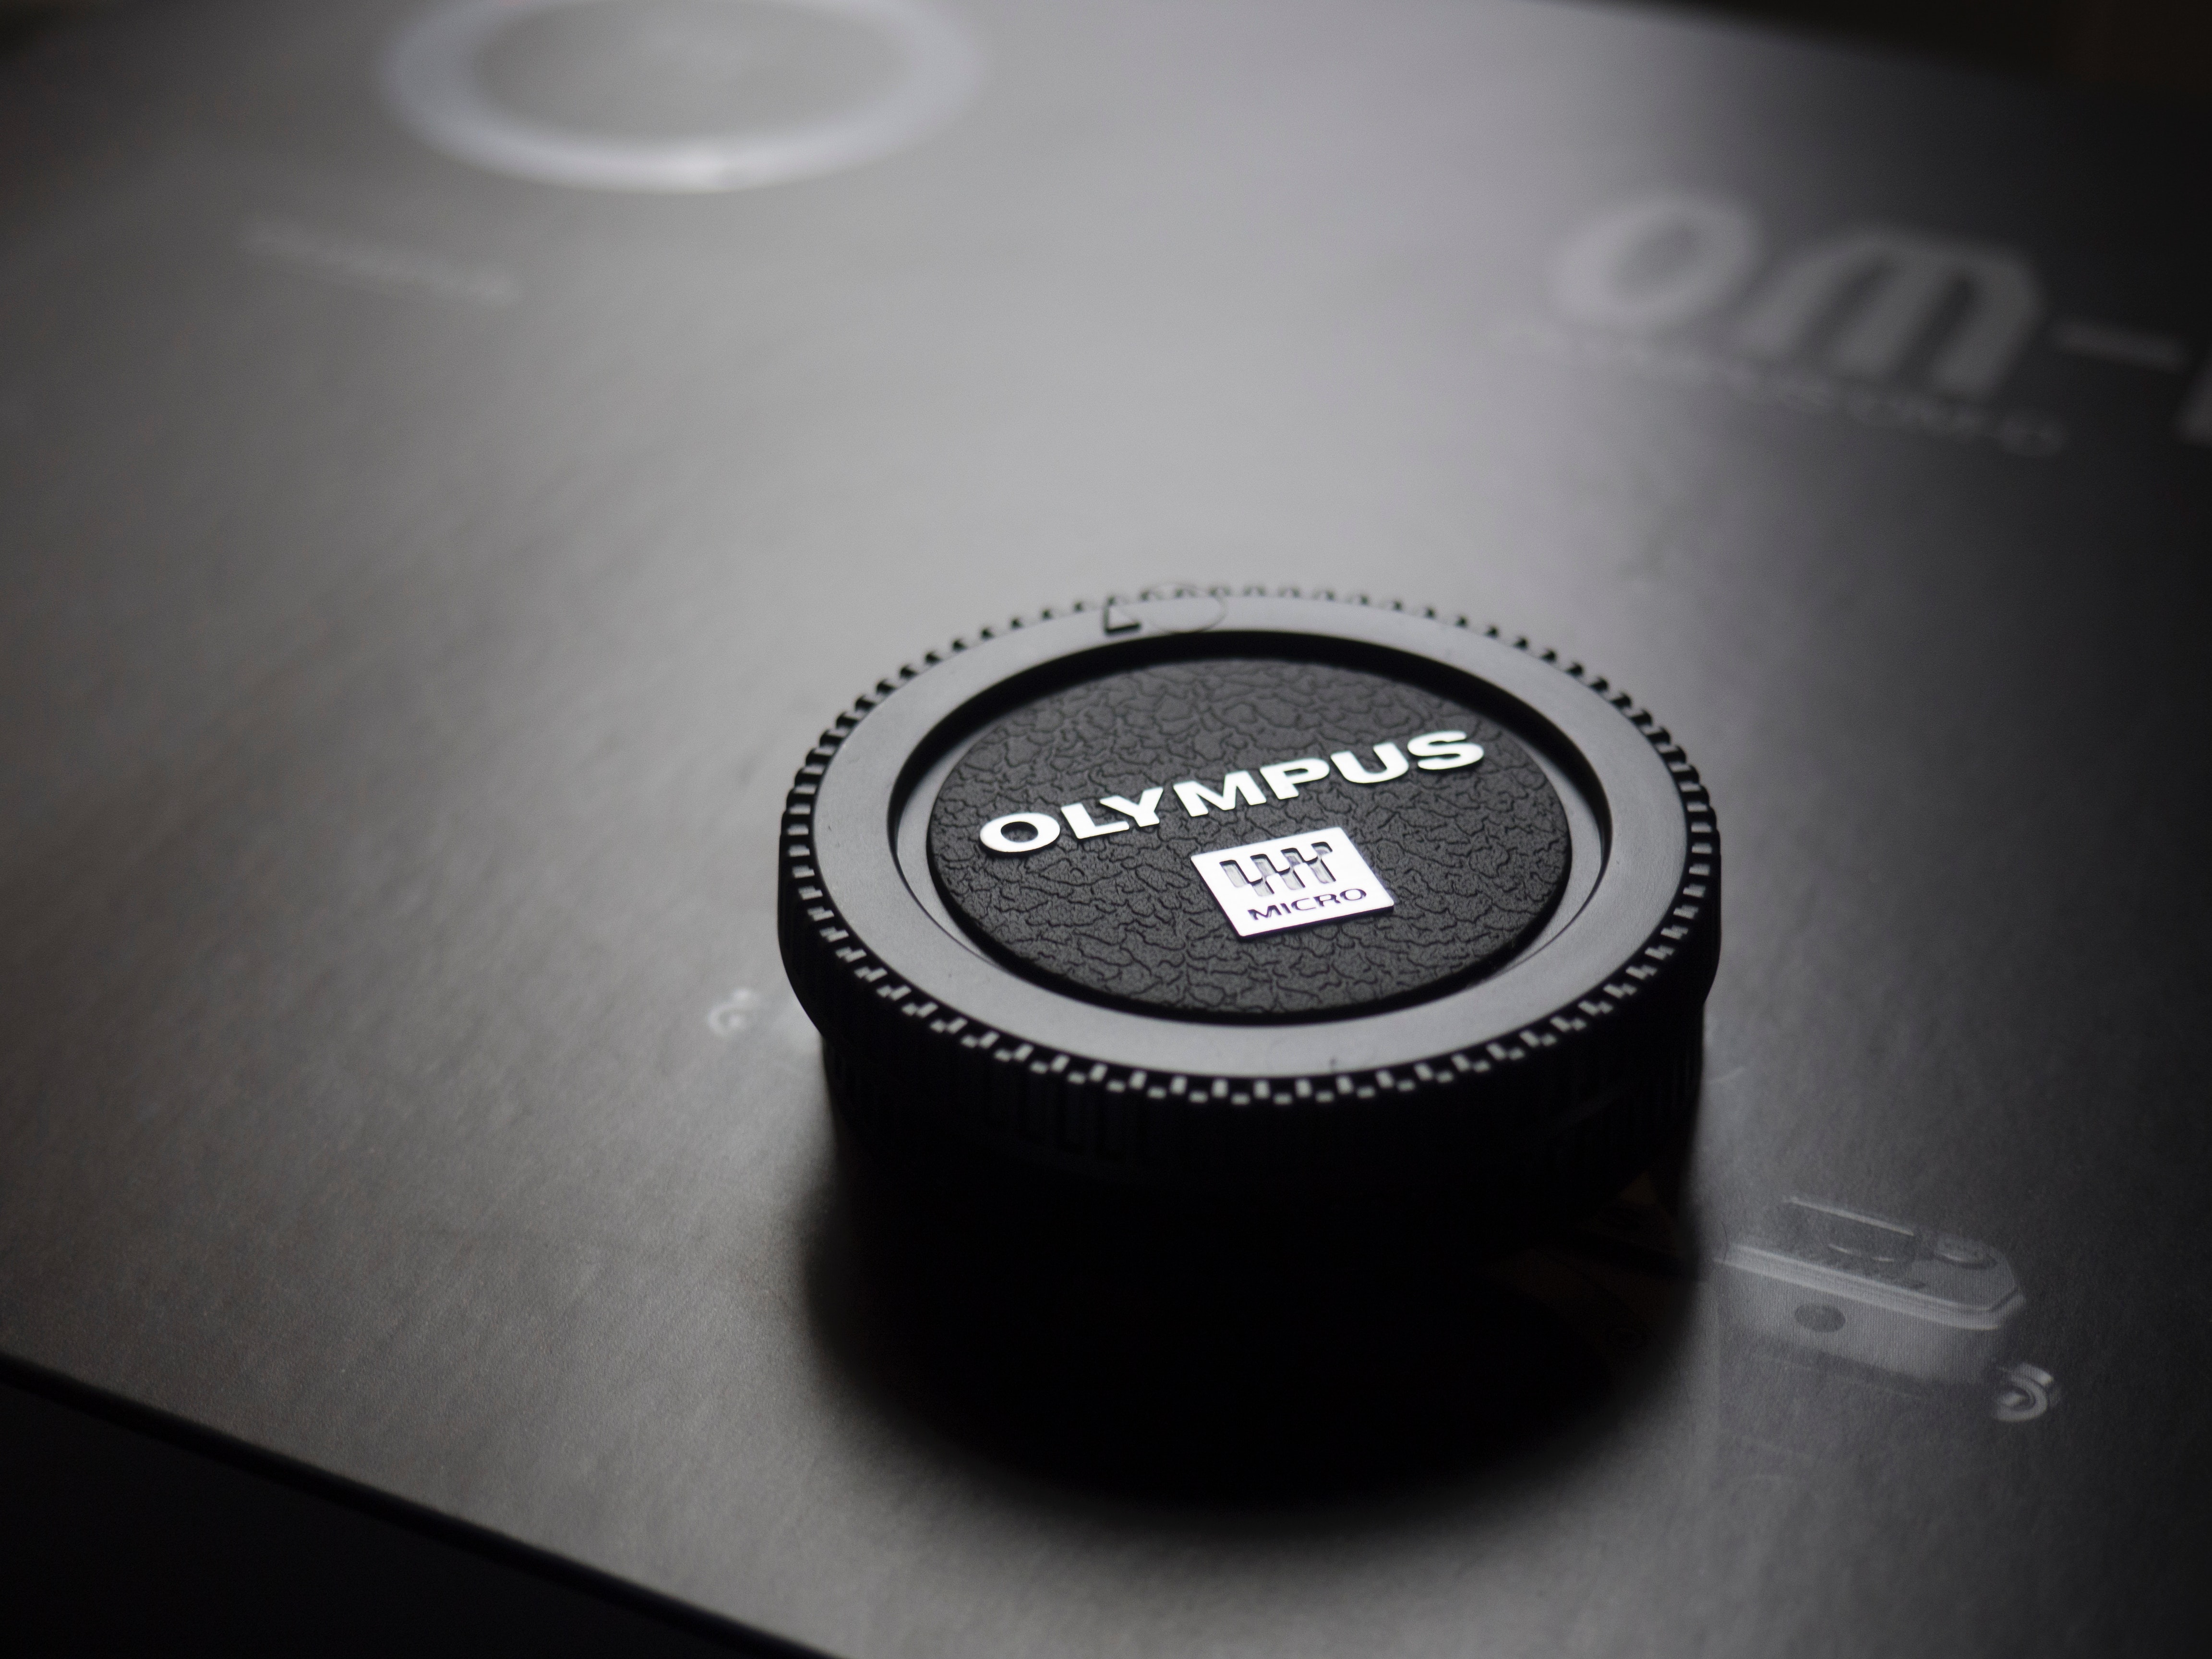 Olympus Camera Lens Cap Placed on Box, Aperture, Black, Black-and-white, Box, HQ Photo